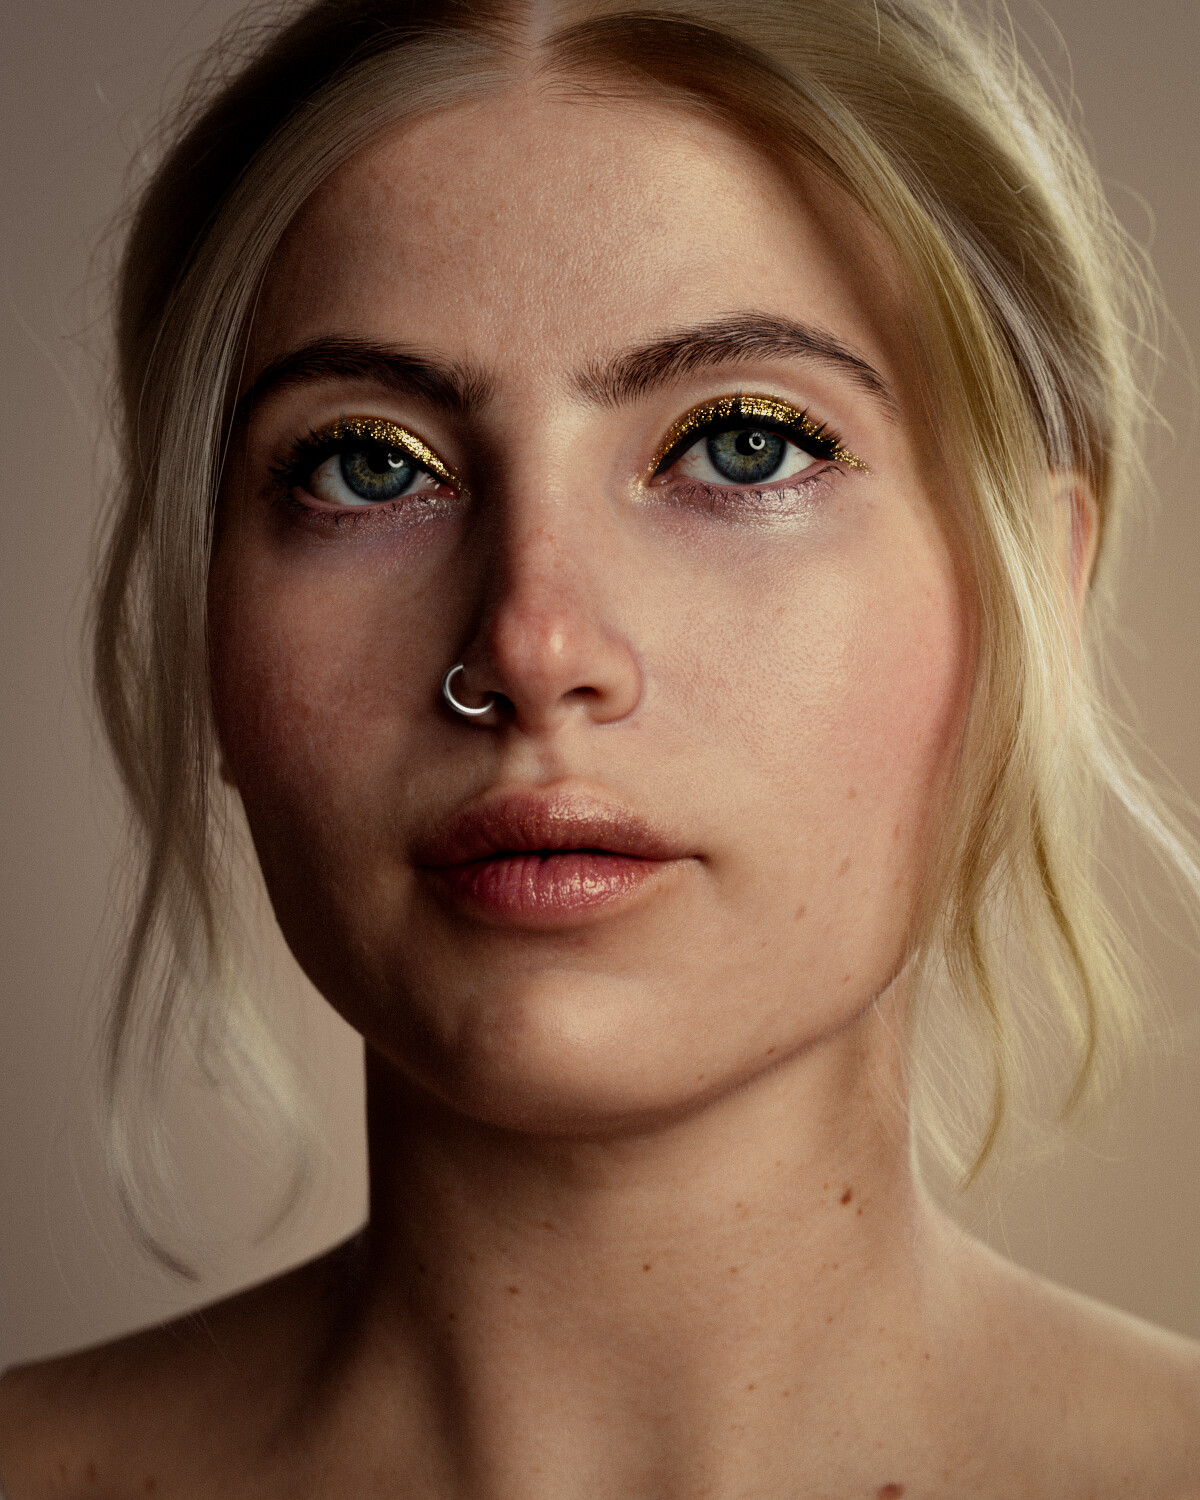 General 1200x1500 digital art women face closeup piercing pierced nose portrait blonde